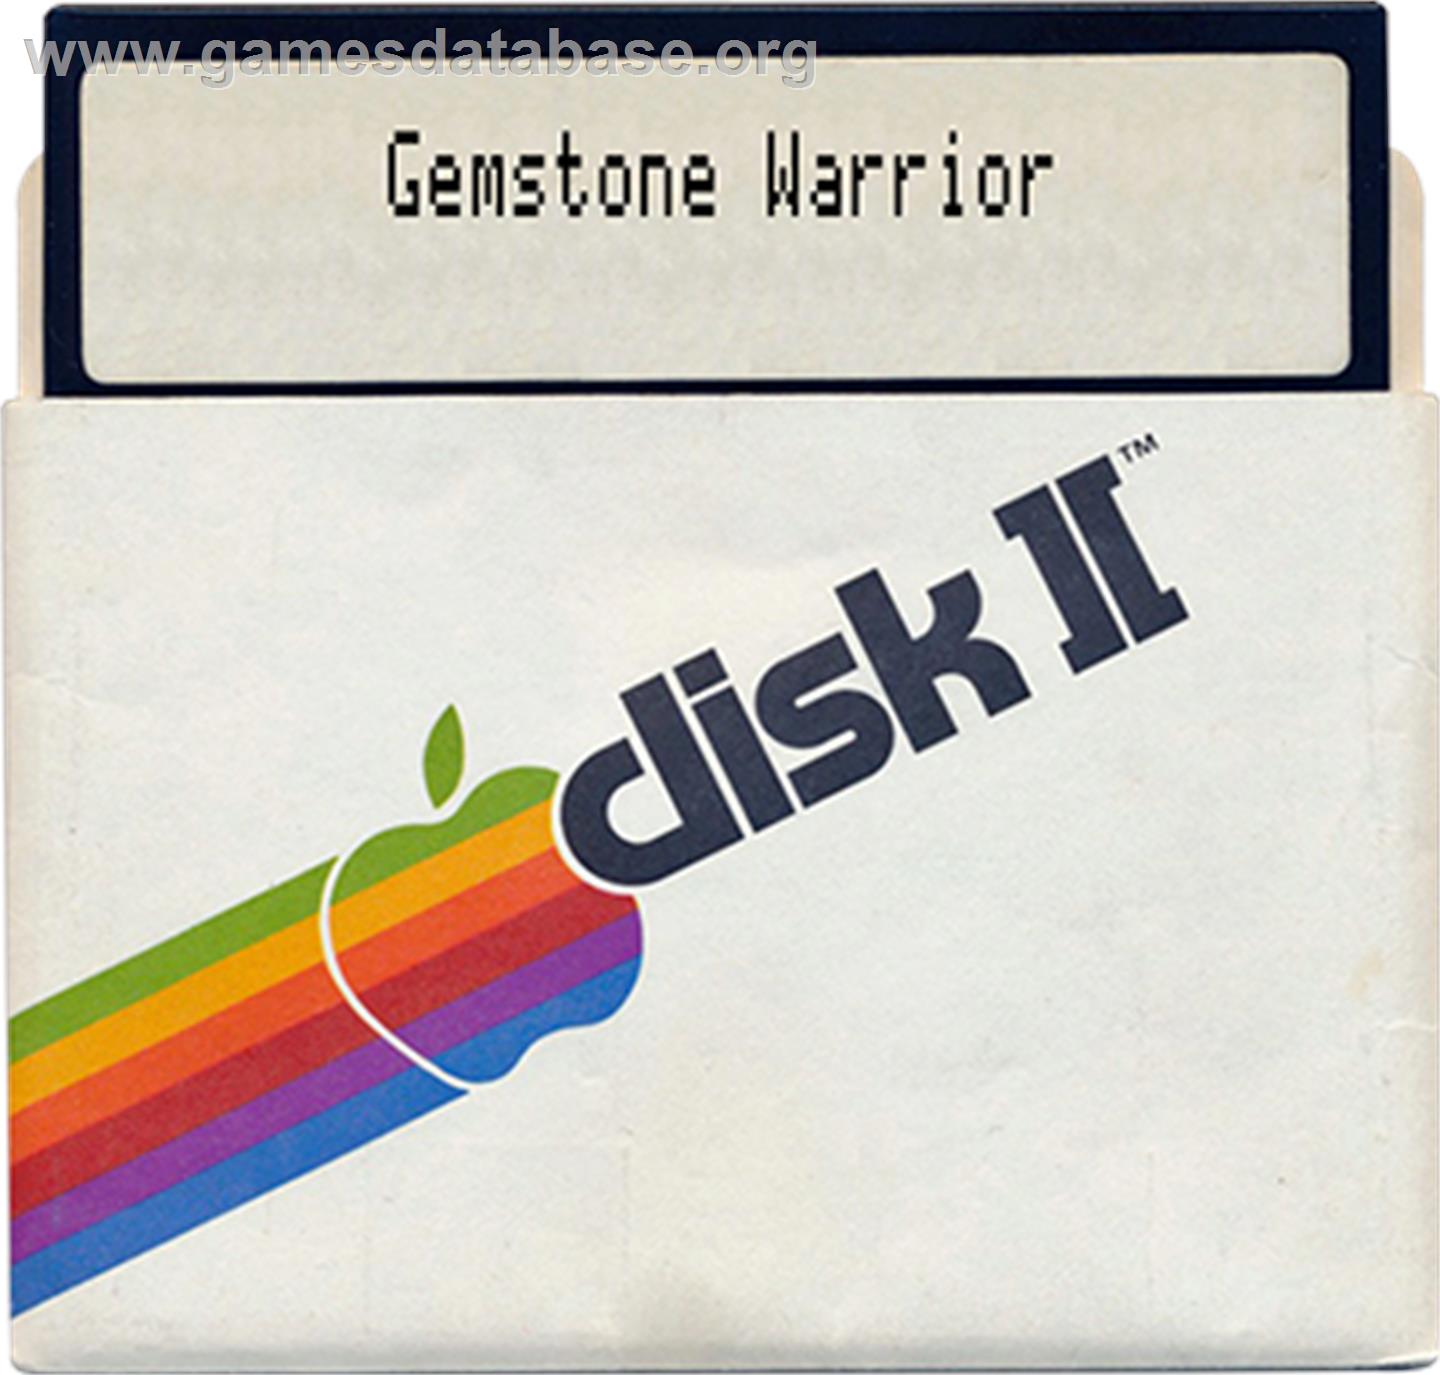 Gemstone Warrior - Apple II - Artwork - Disc